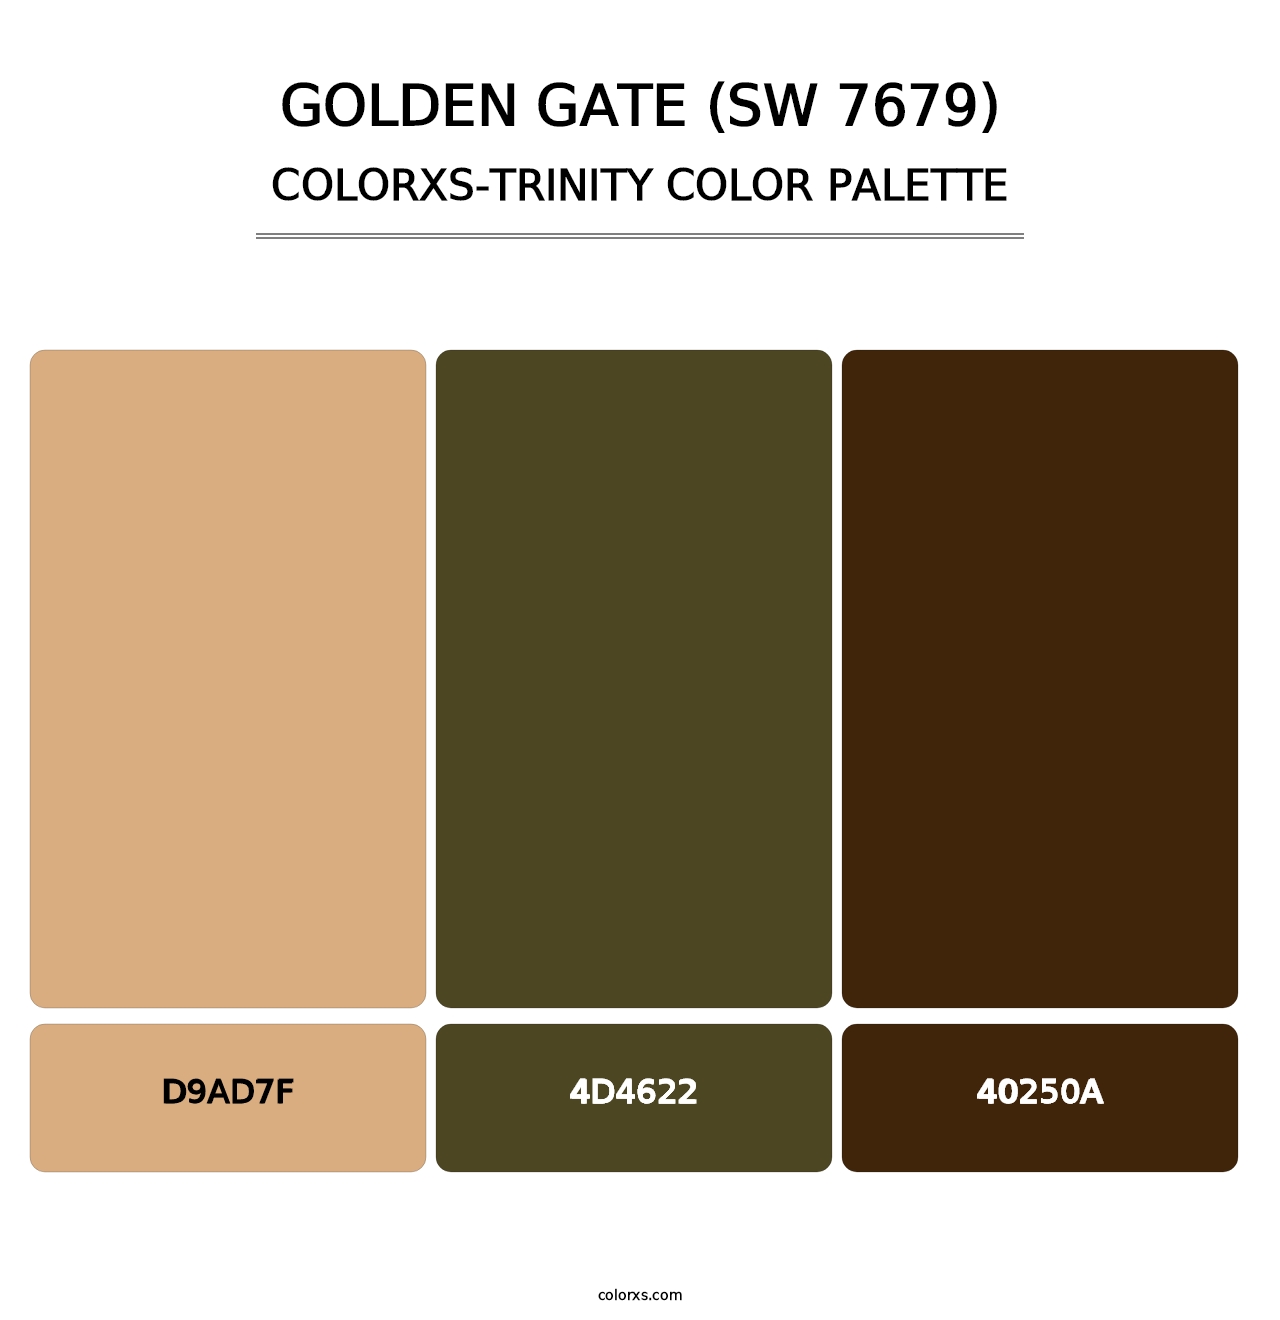 Golden Gate (SW 7679) - Colorxs Trinity Palette